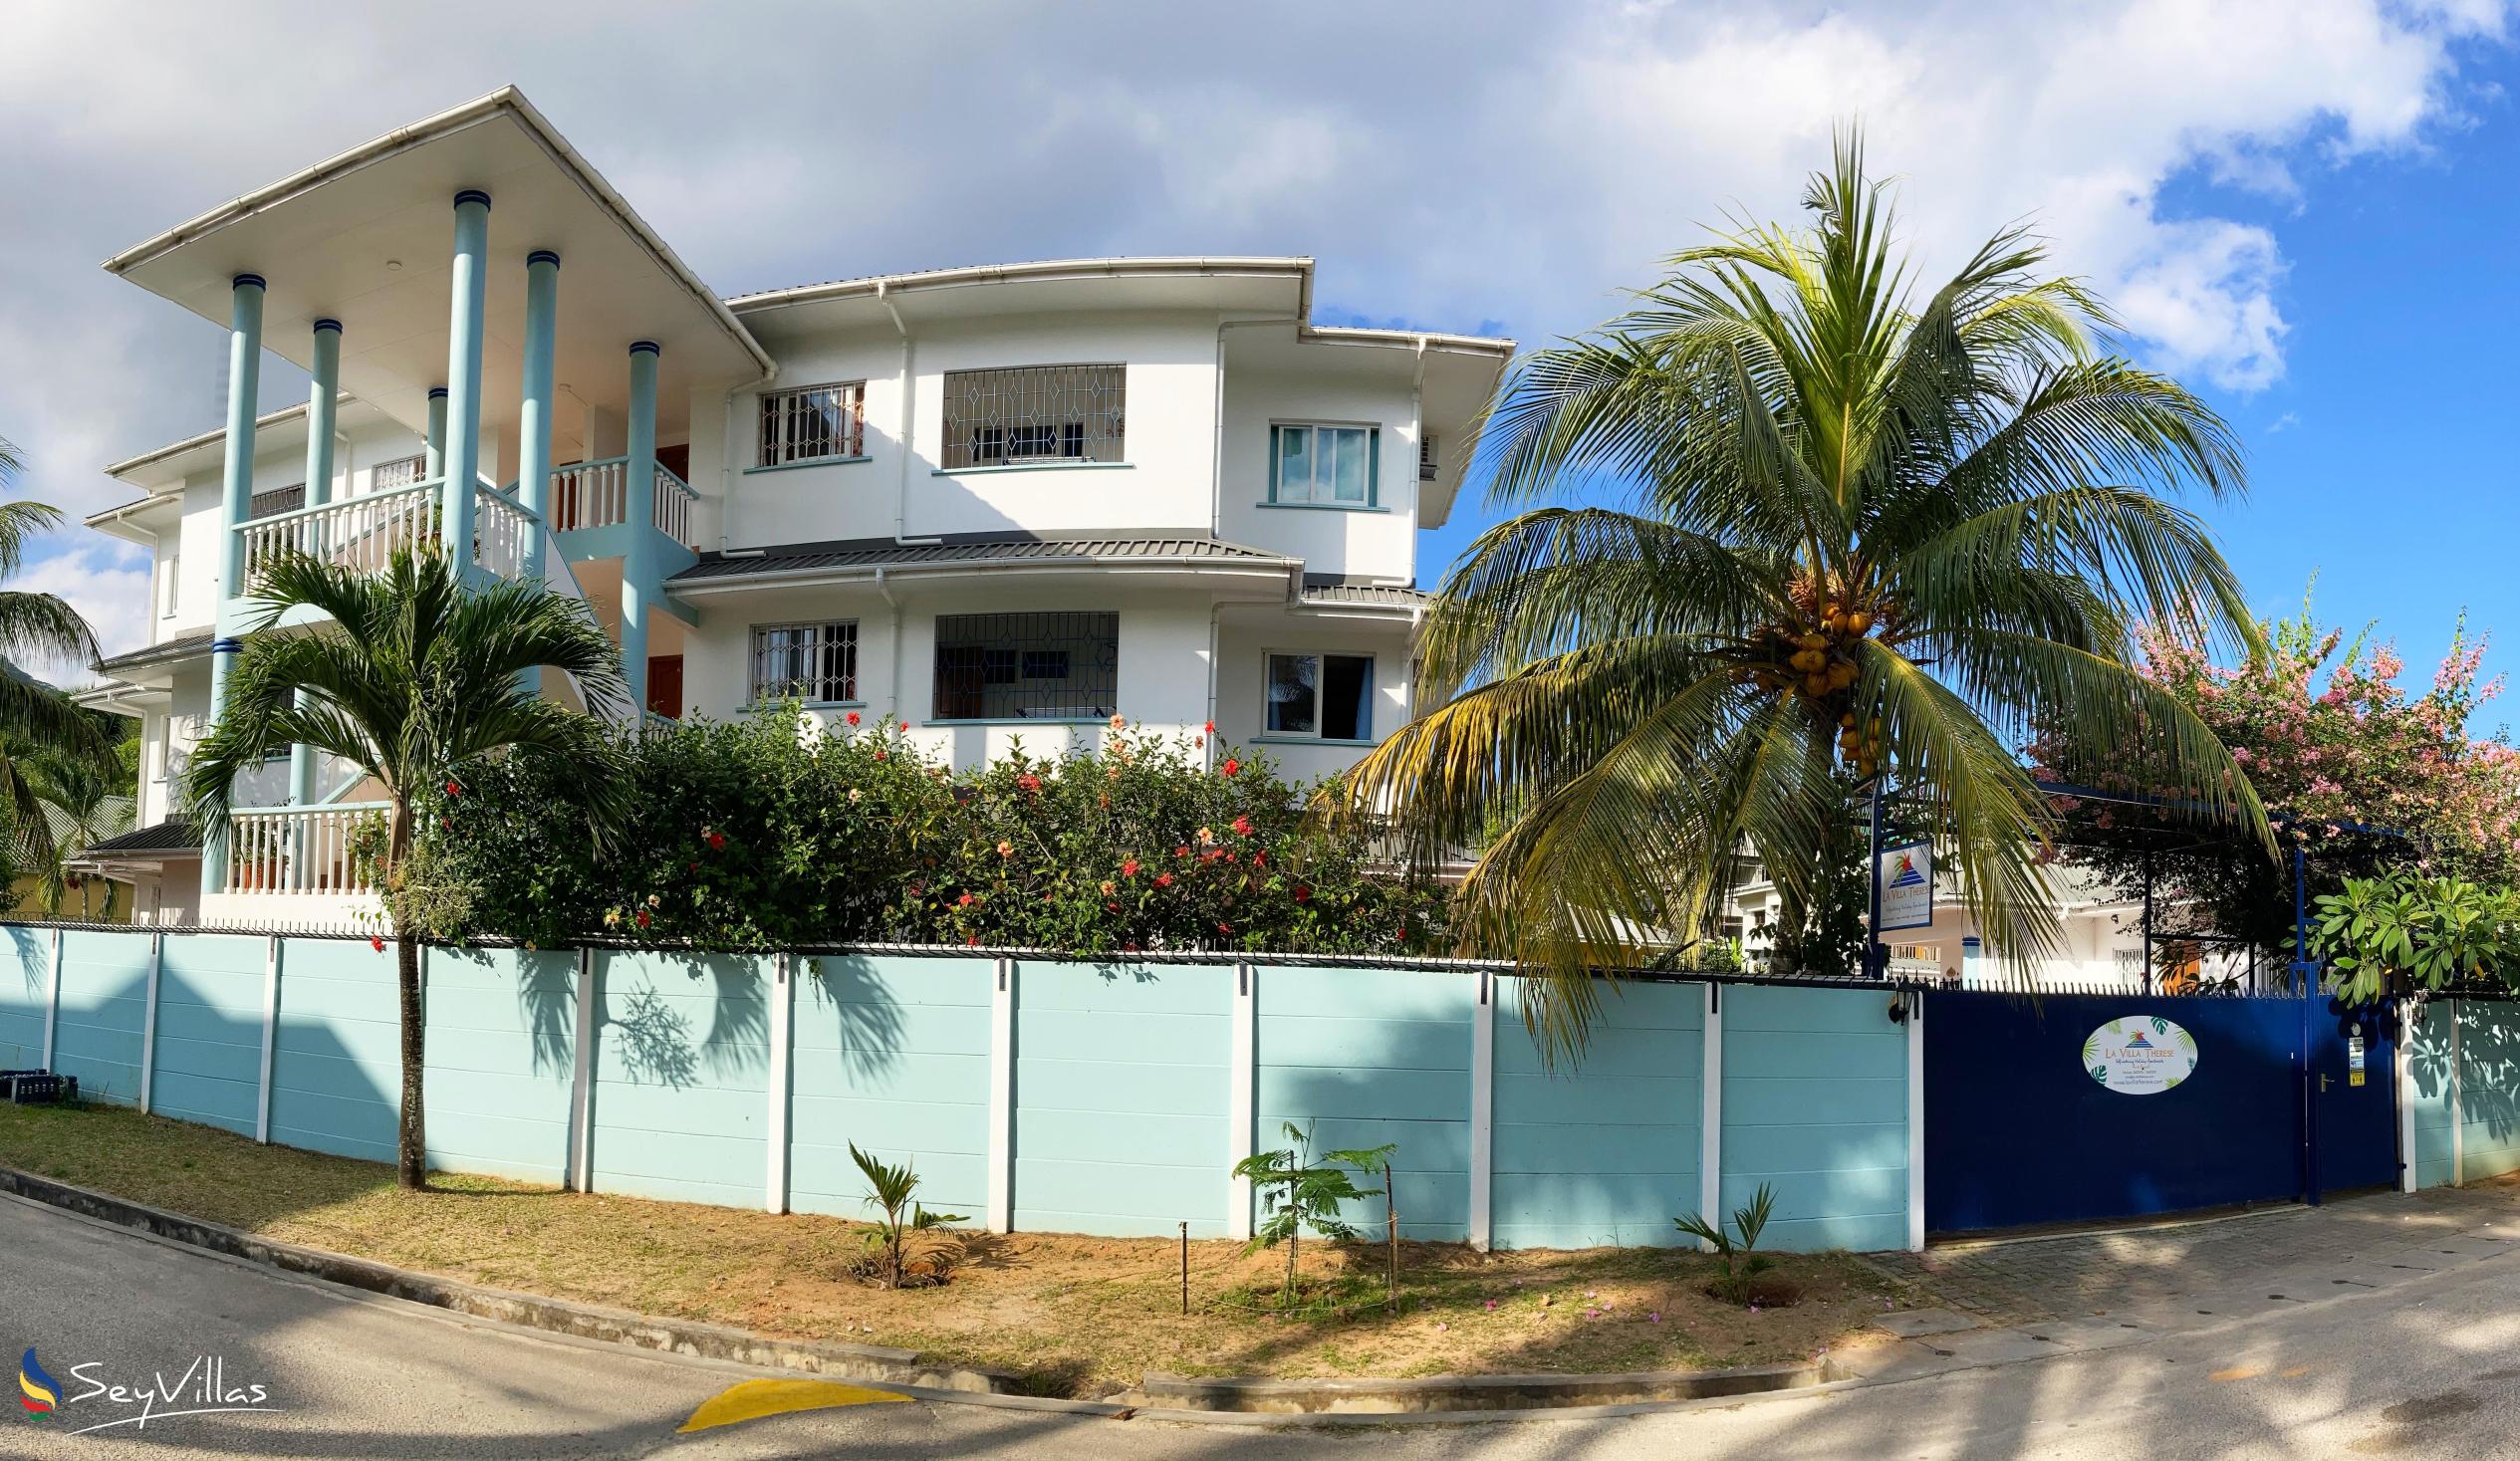 Photo 6: La Villa Therese Holiday Apartments - Outdoor area - Mahé (Seychelles)